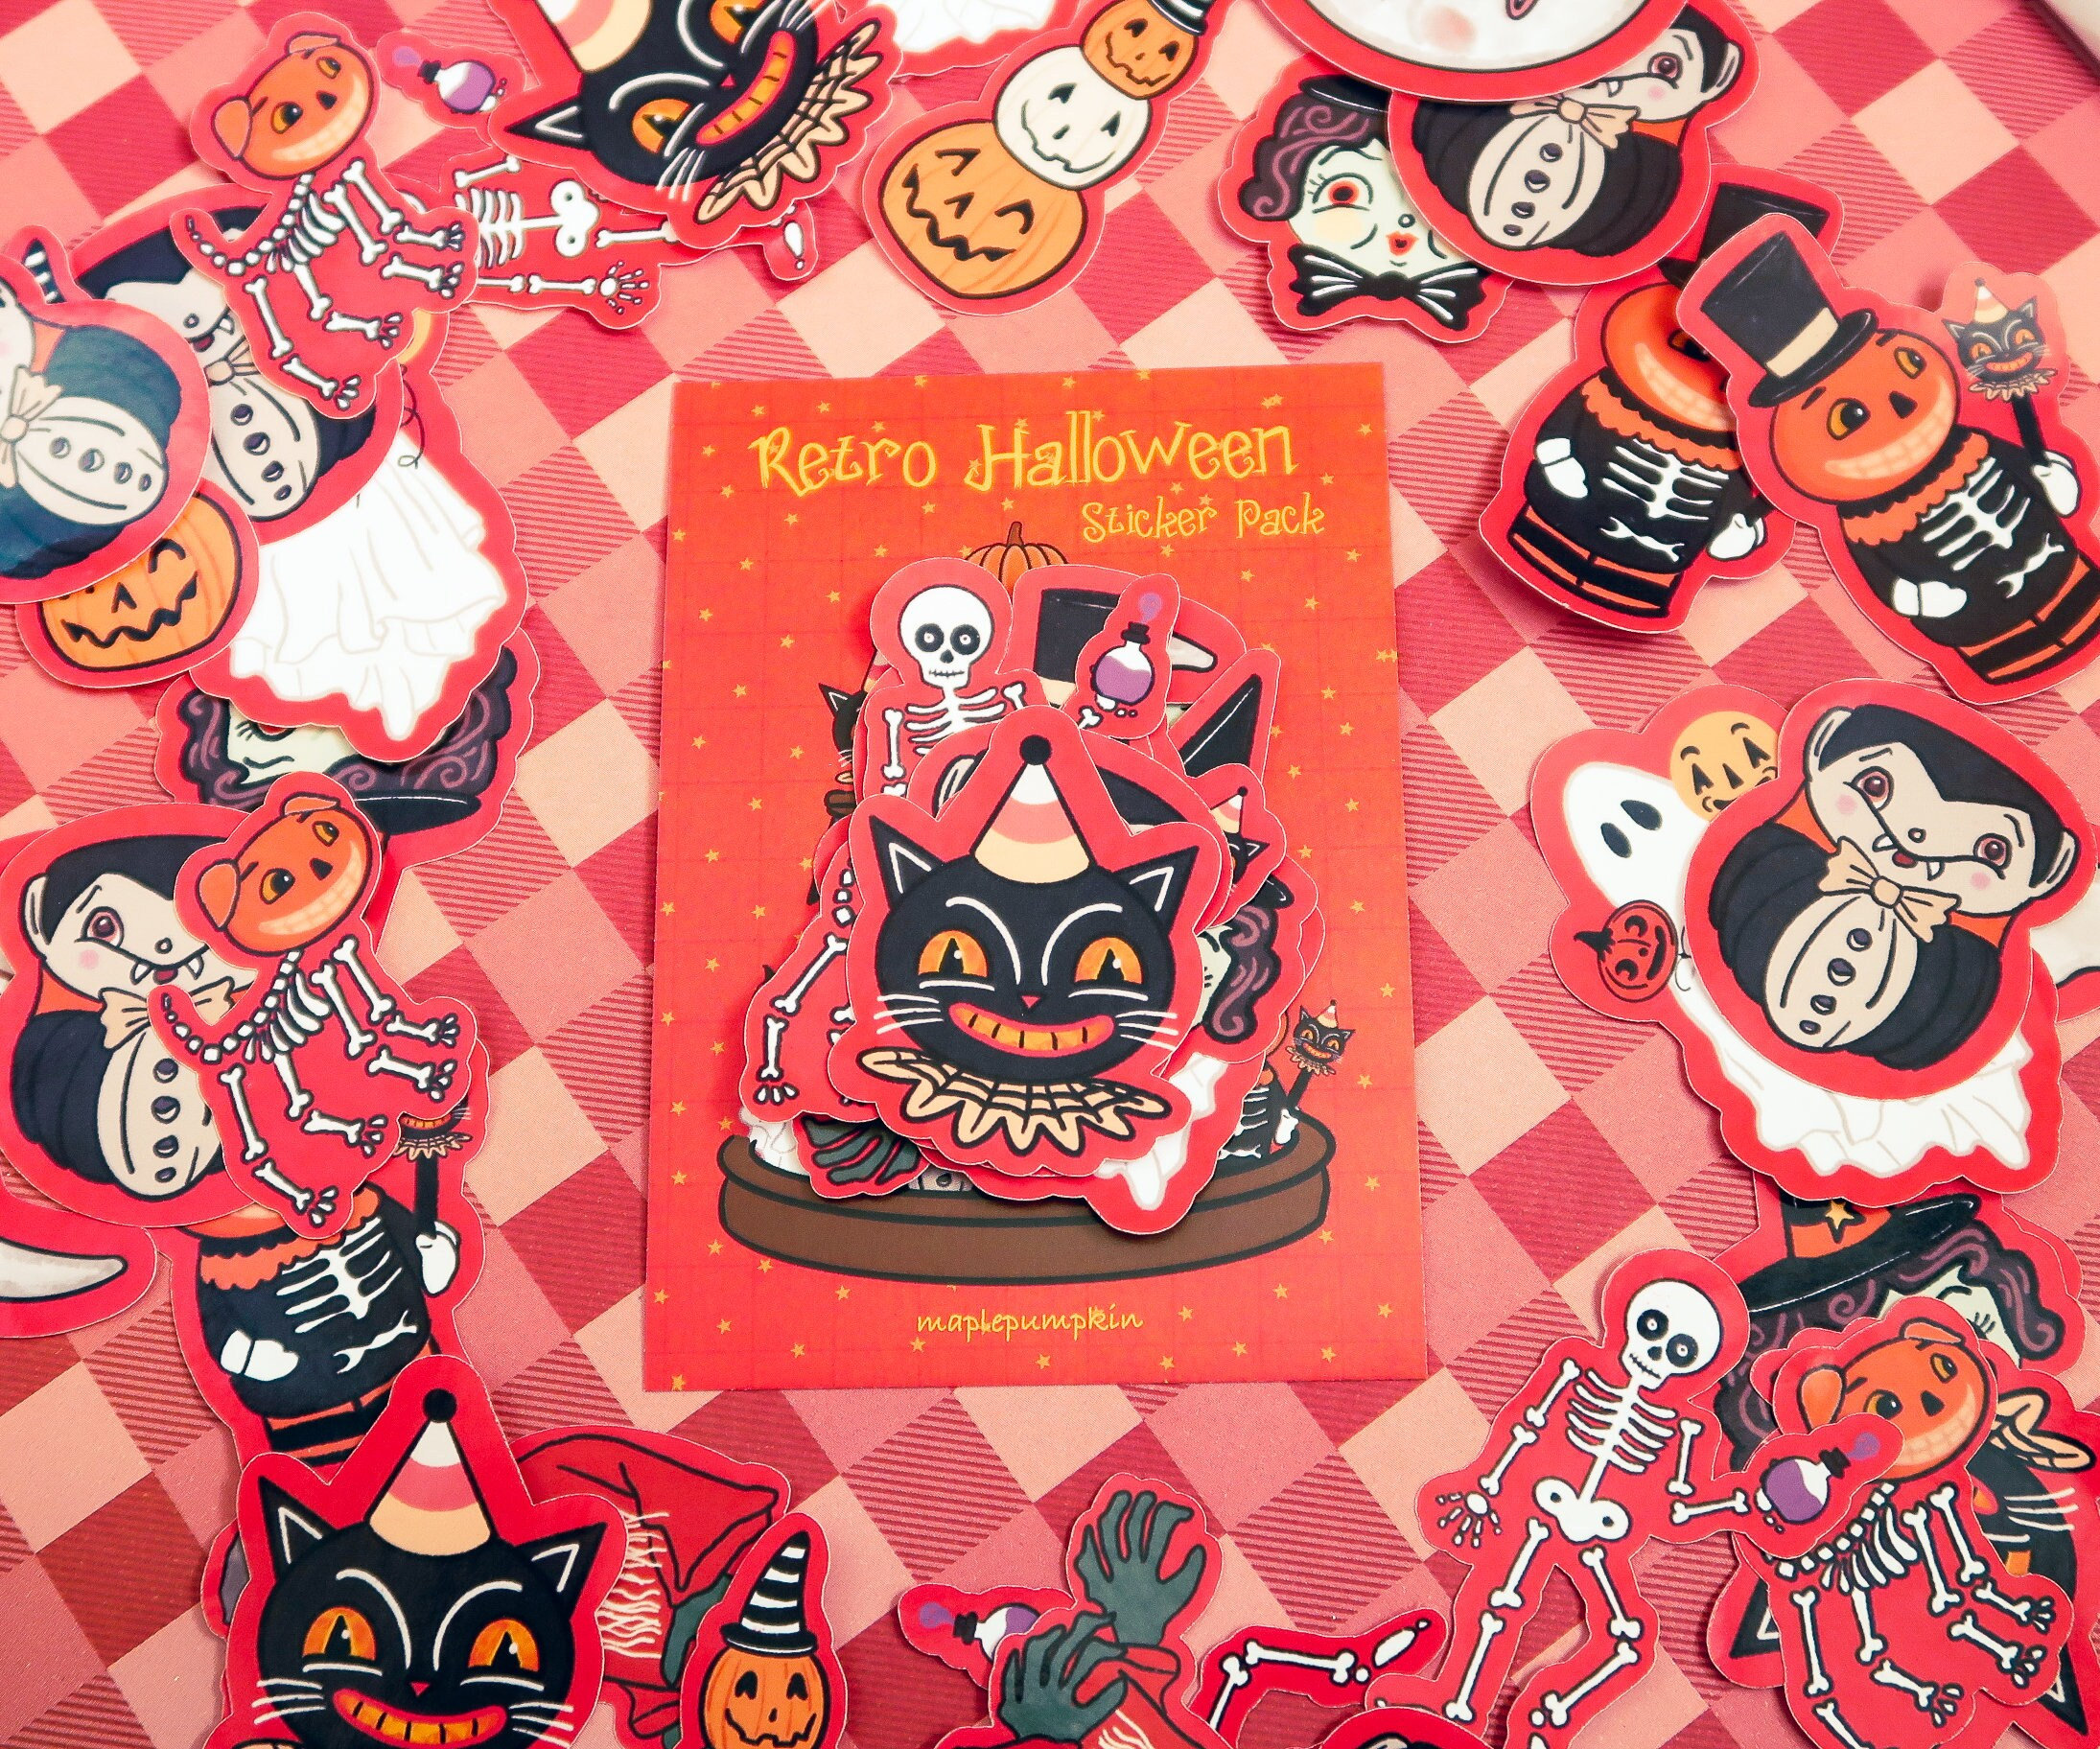 Johanna Parker Festive Halloween Character Stickers – Vintage Halloween